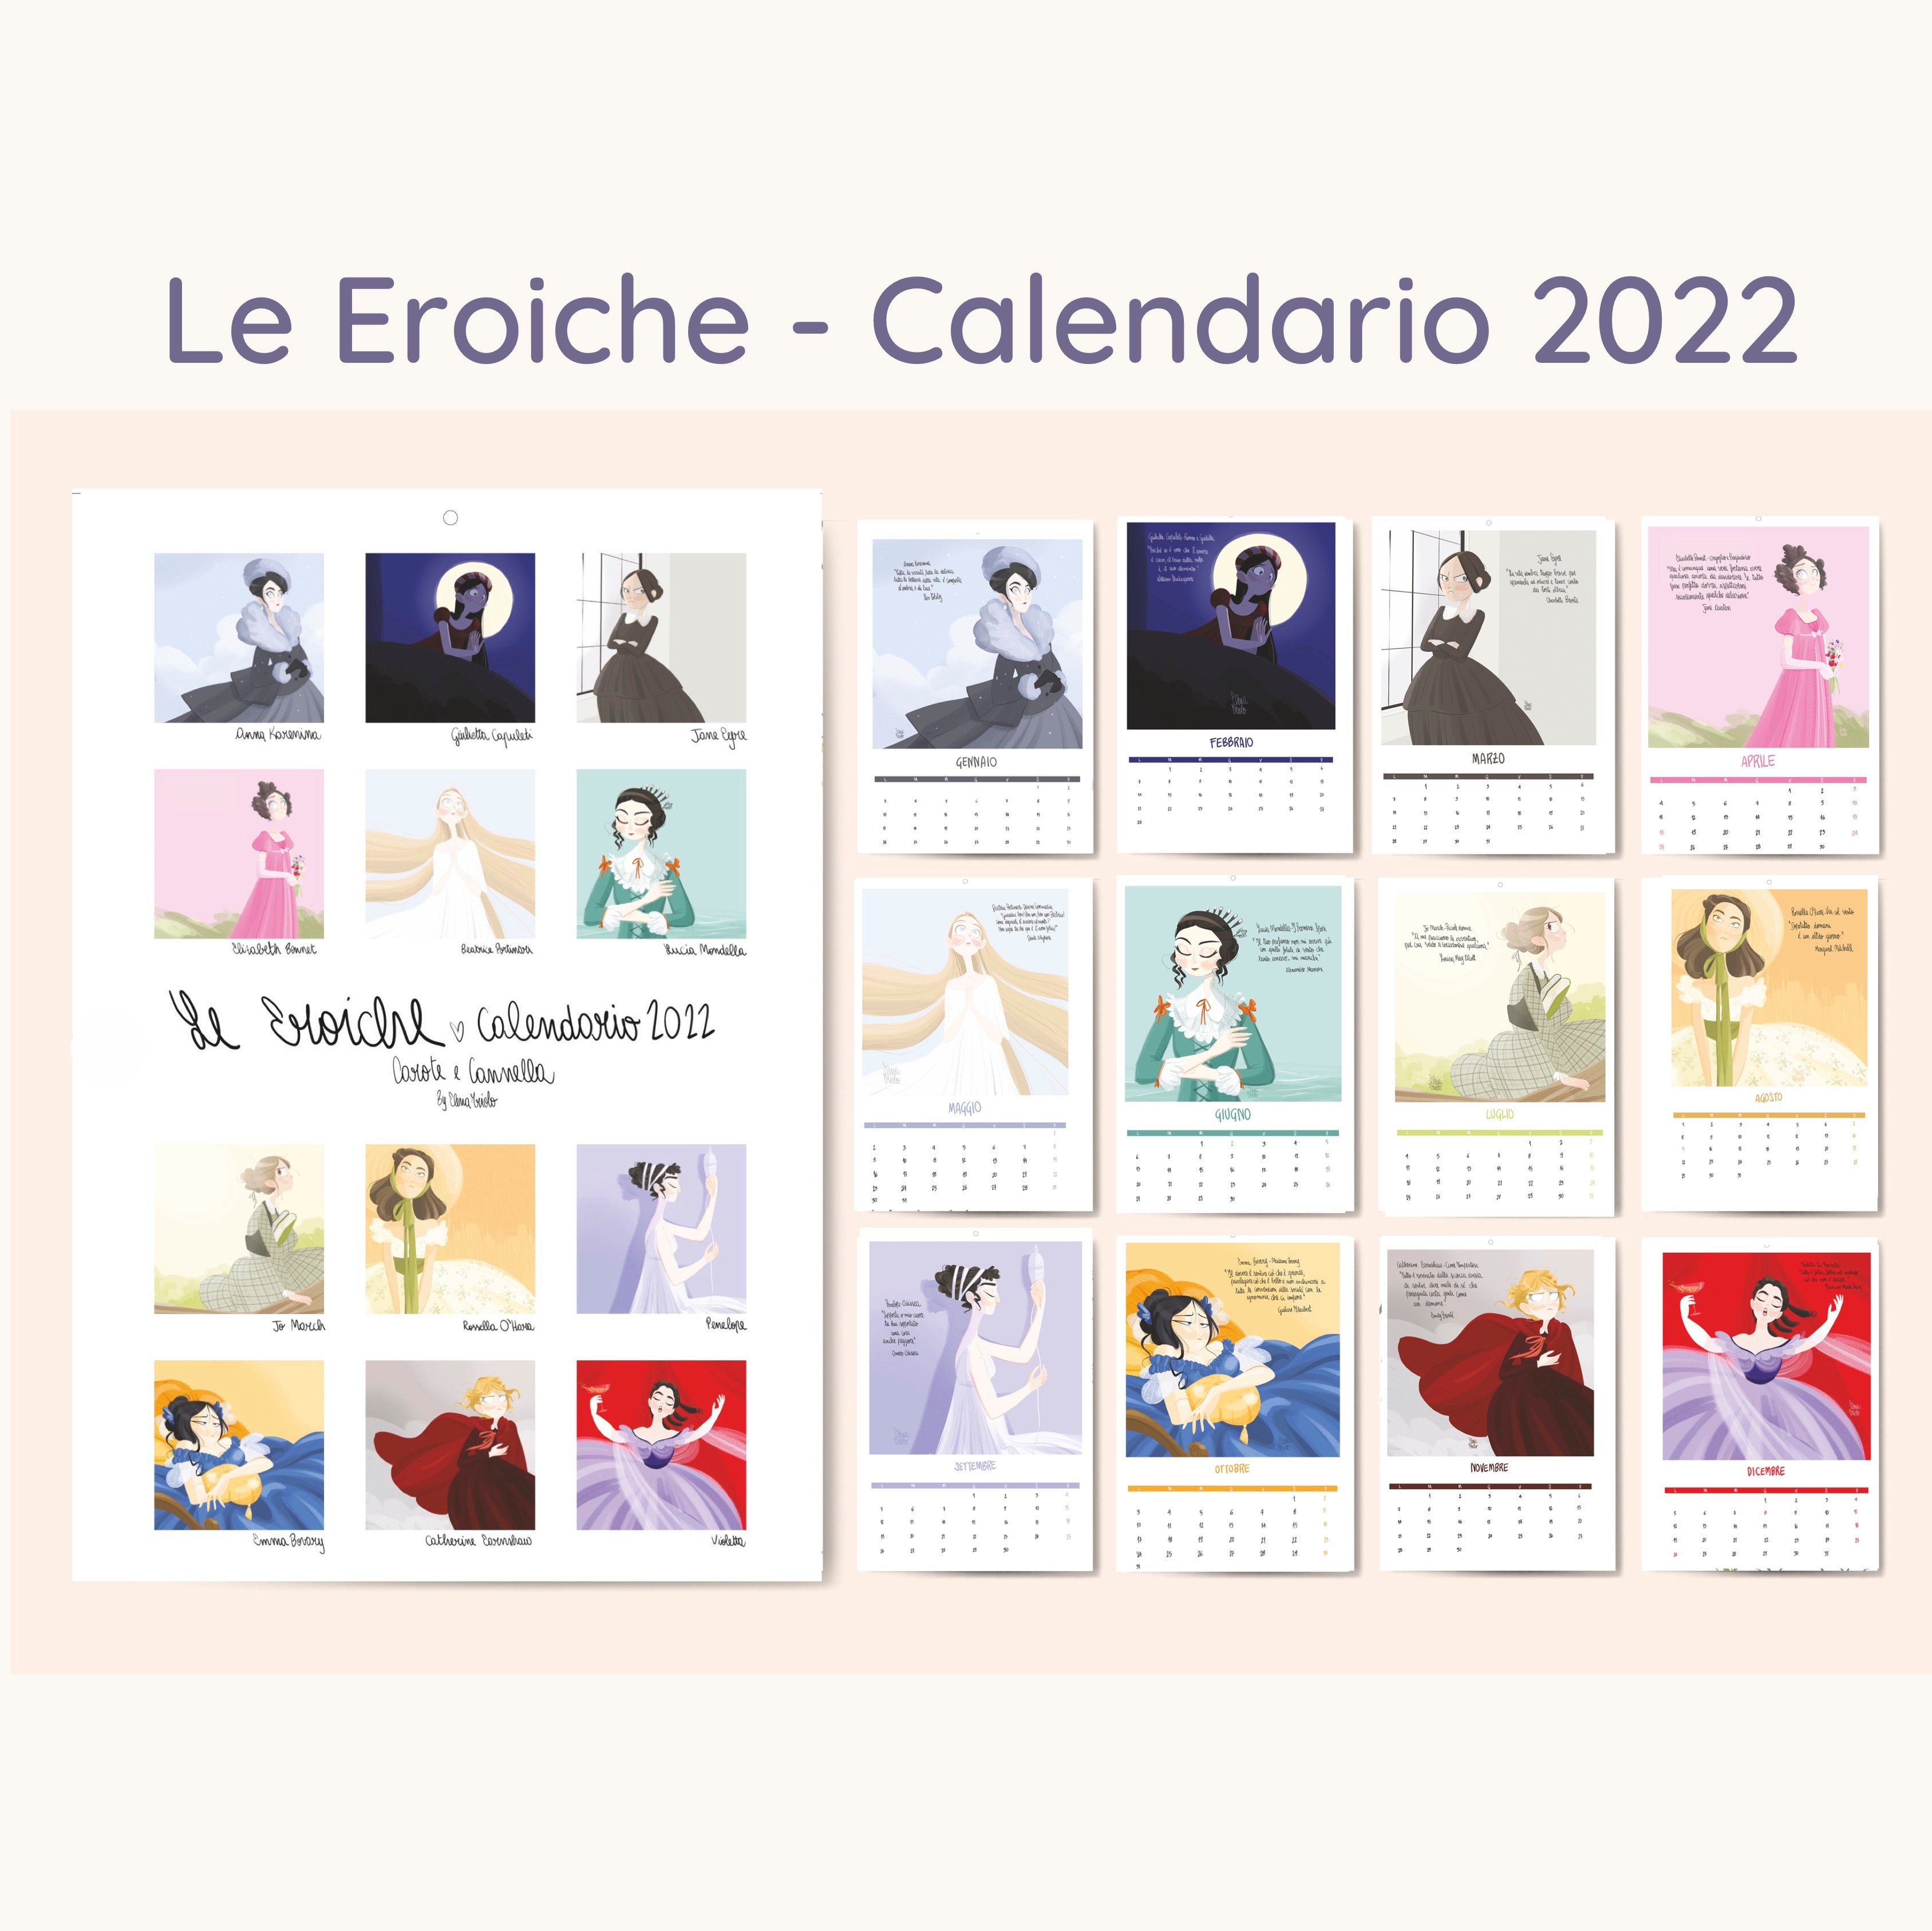 Le Eroiche - Calendario 2022